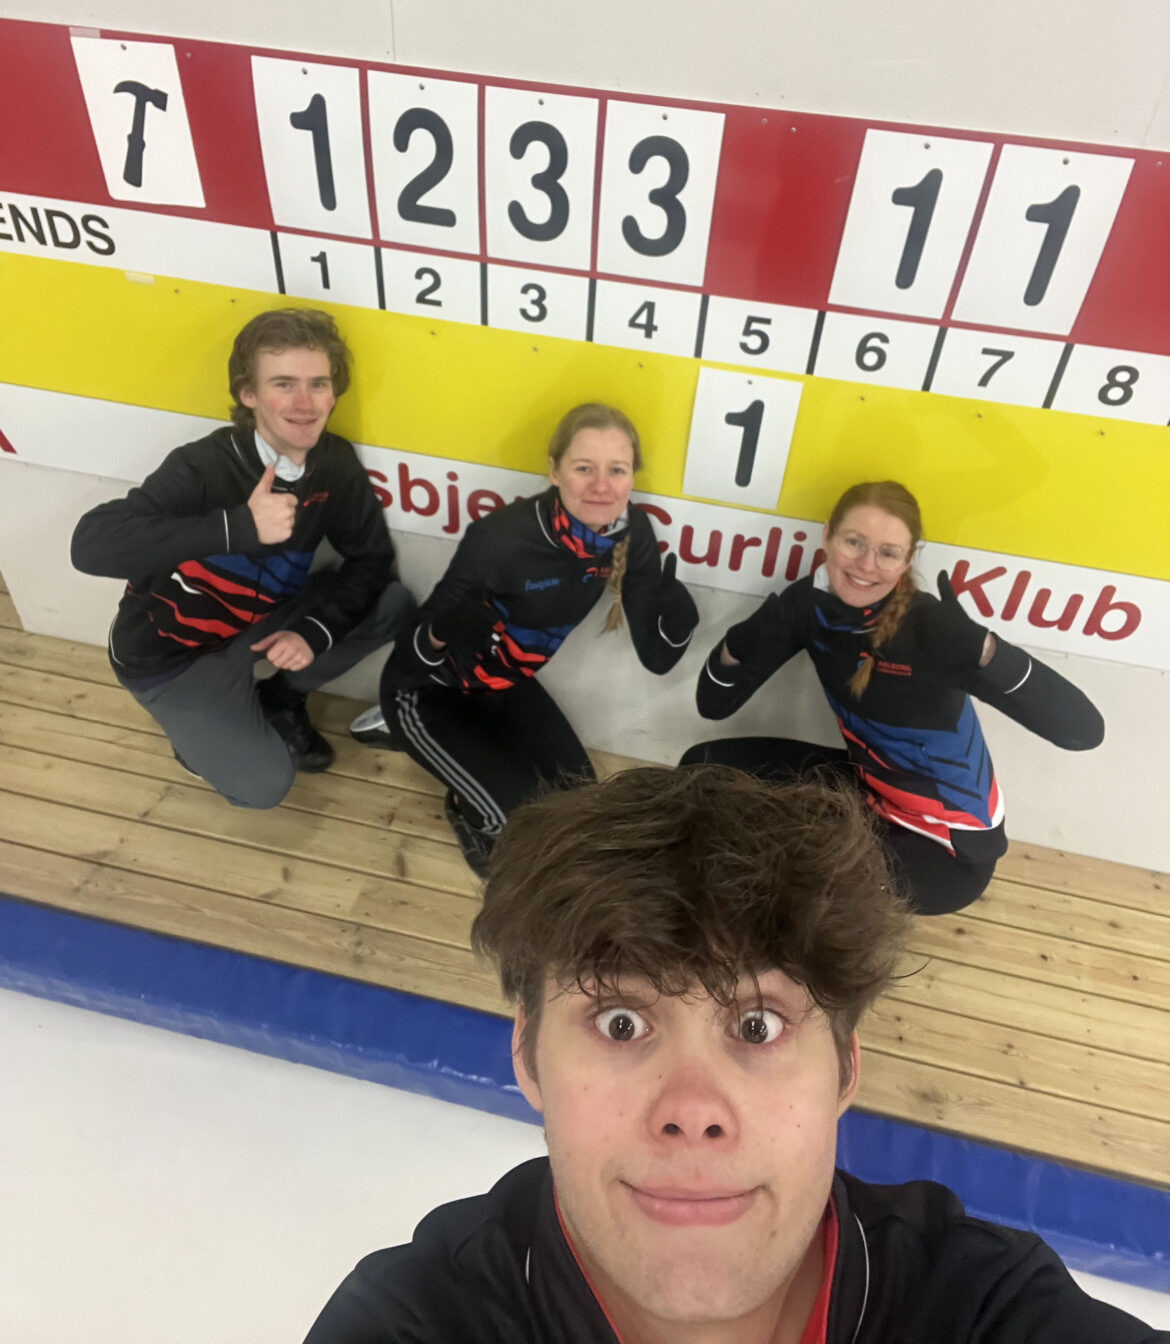 Satsninger gav vækst: Aalborg Curling Klub har tredoblet medlemmer på isen